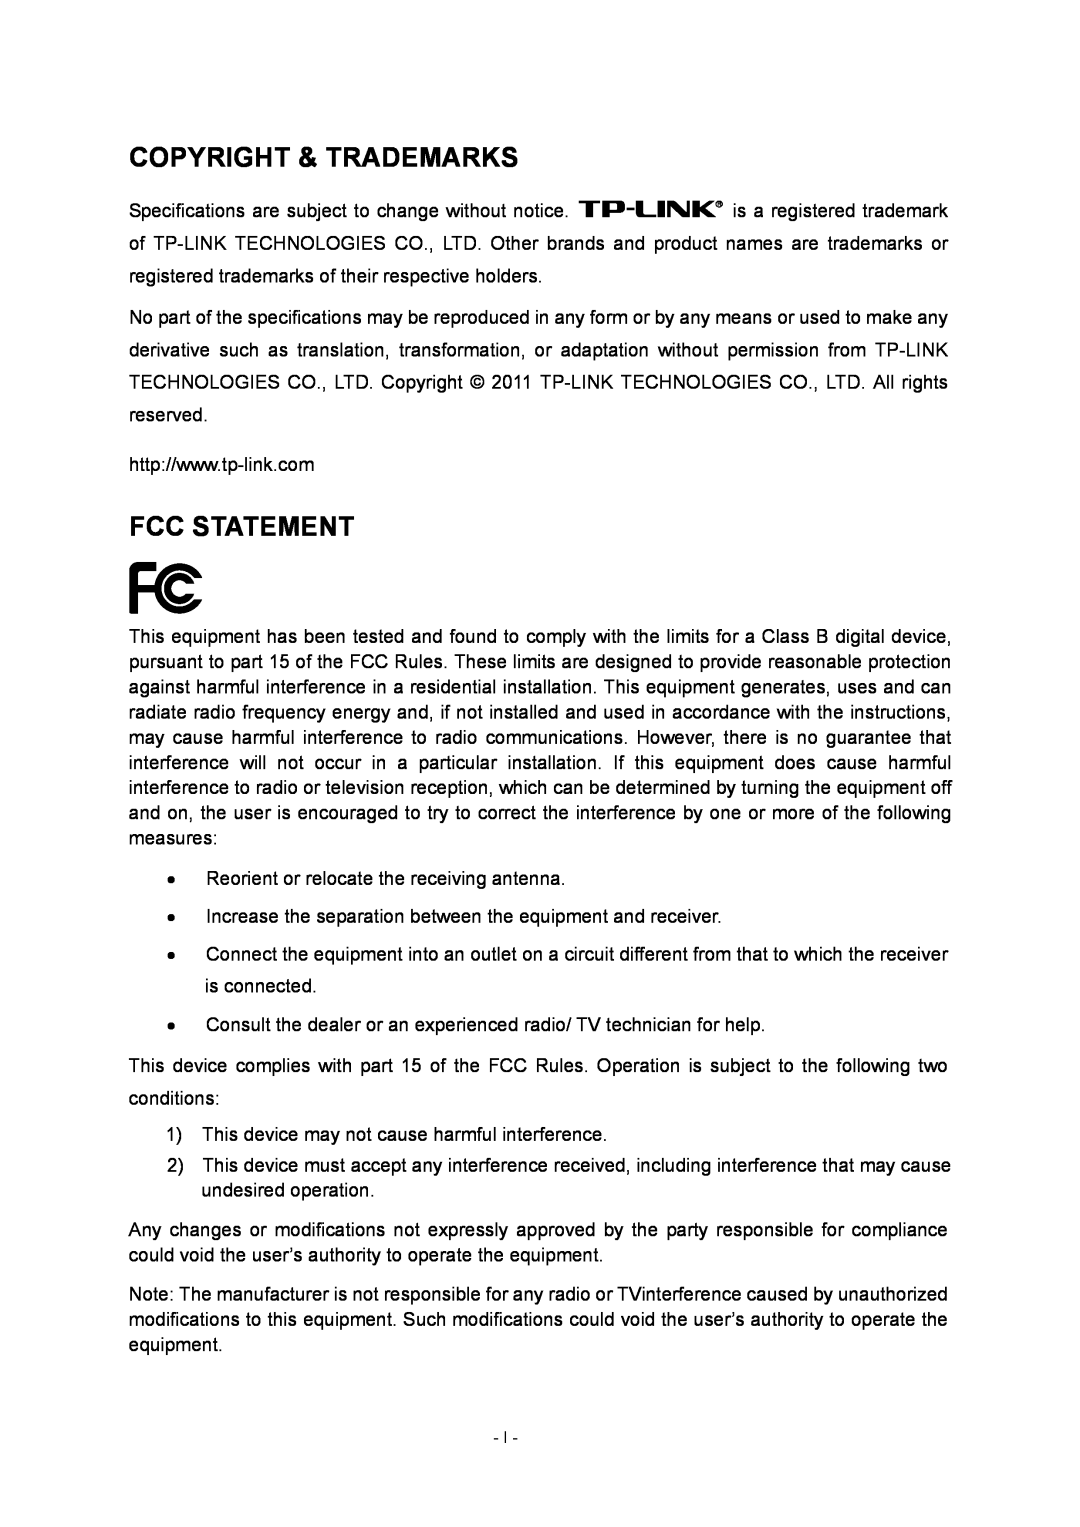 TP-Link TL-WR702N manual Copyright & Trademarks, Fcc Statement 